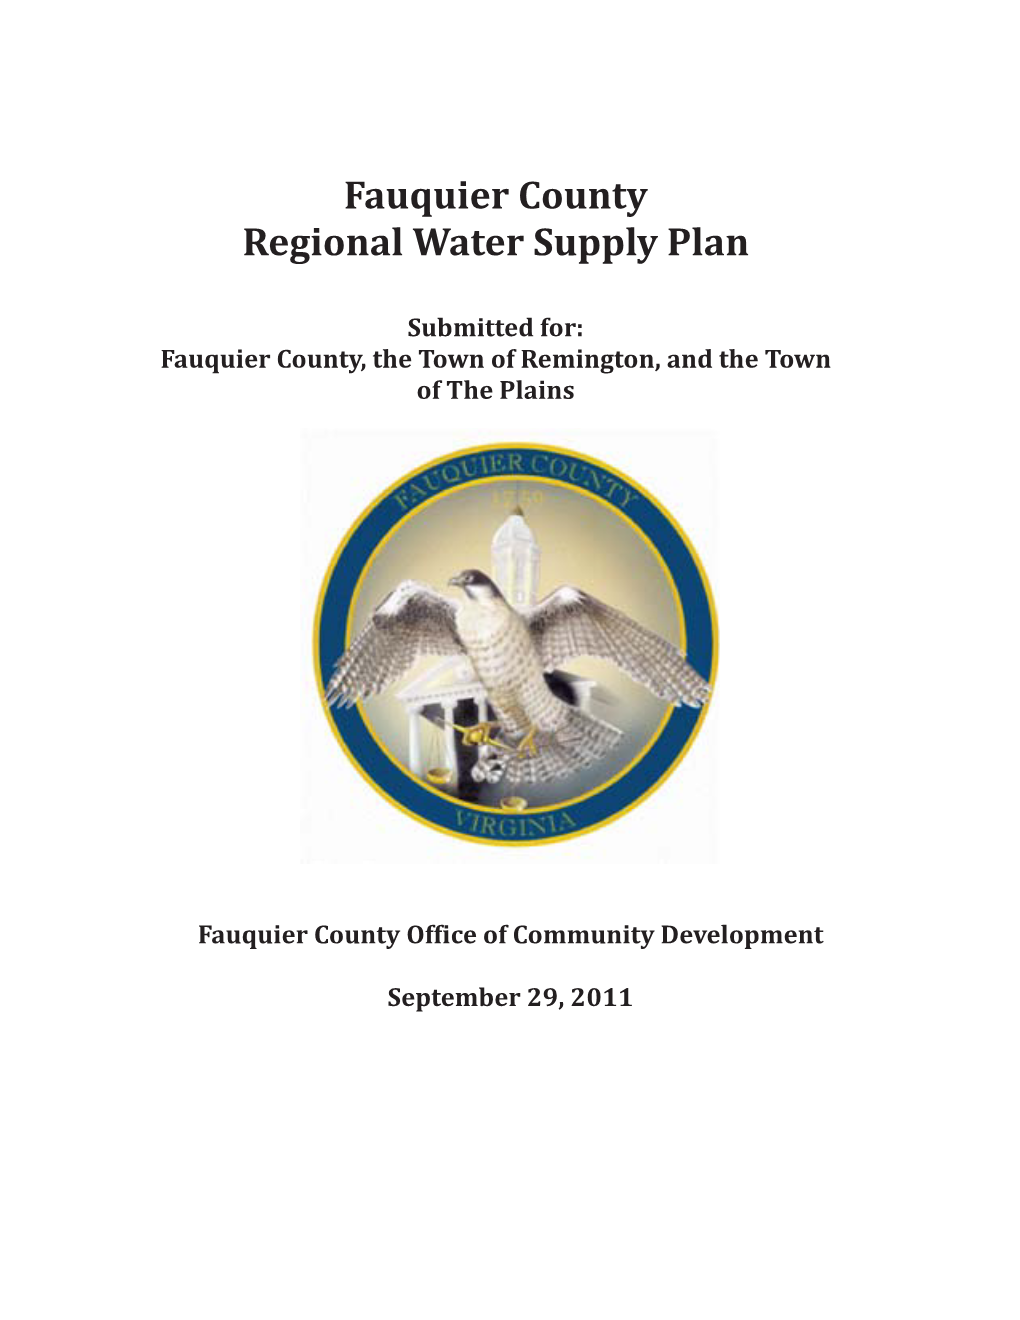 Fauquier County Regional Water Supply Plan